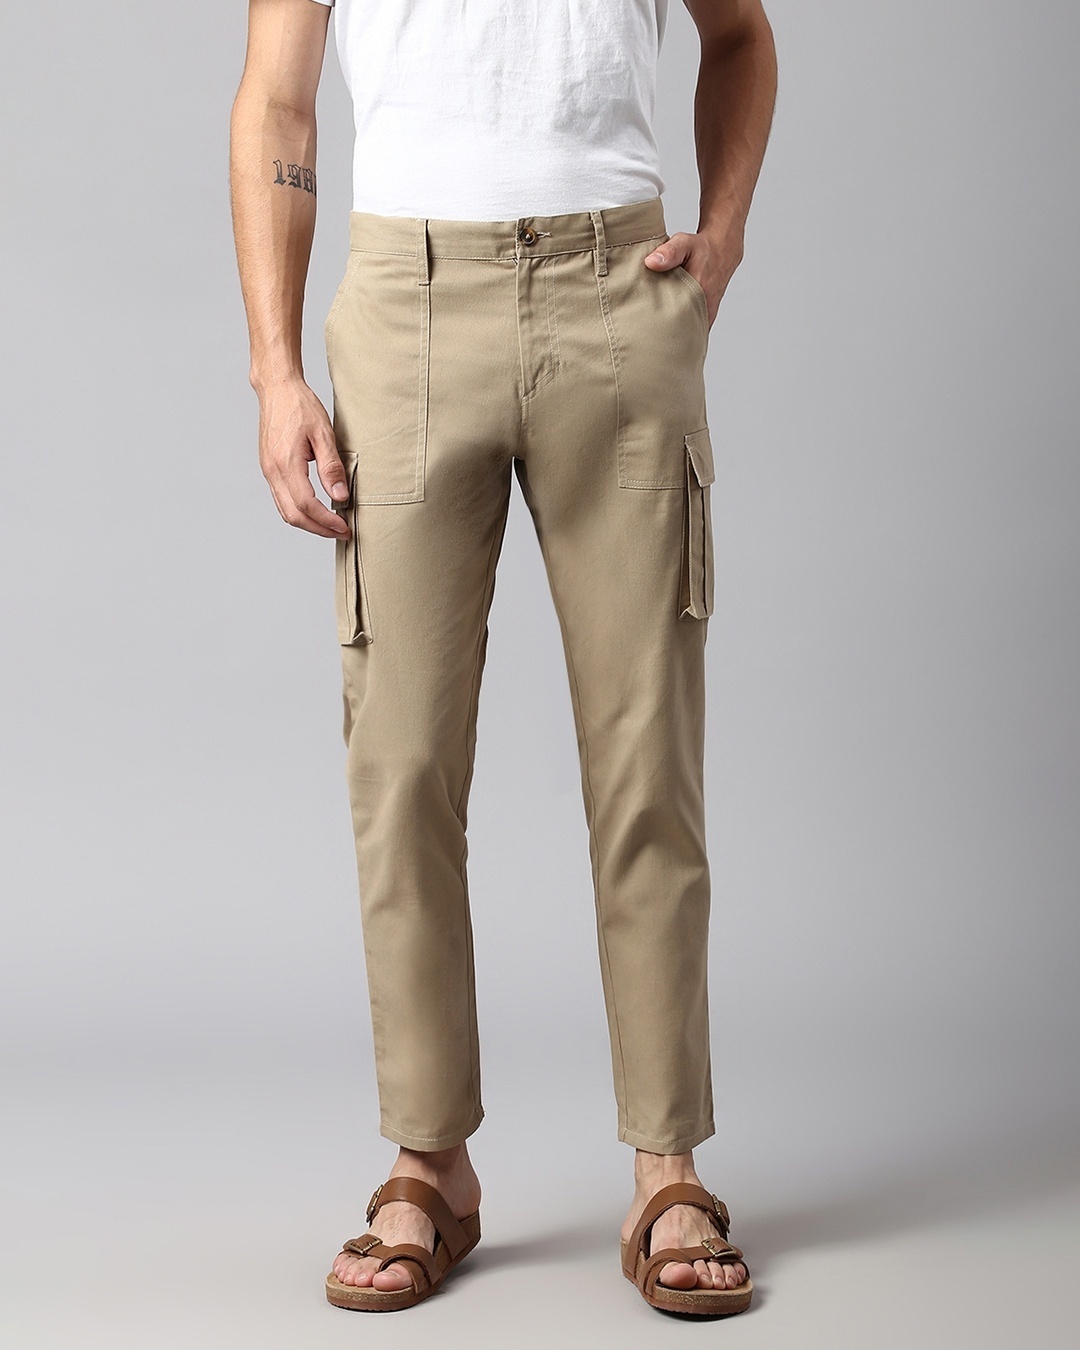 883 Police Bonetti Charcoal Grey Slim Fit Cargo Pants - Clothing from N22  Menswear UK